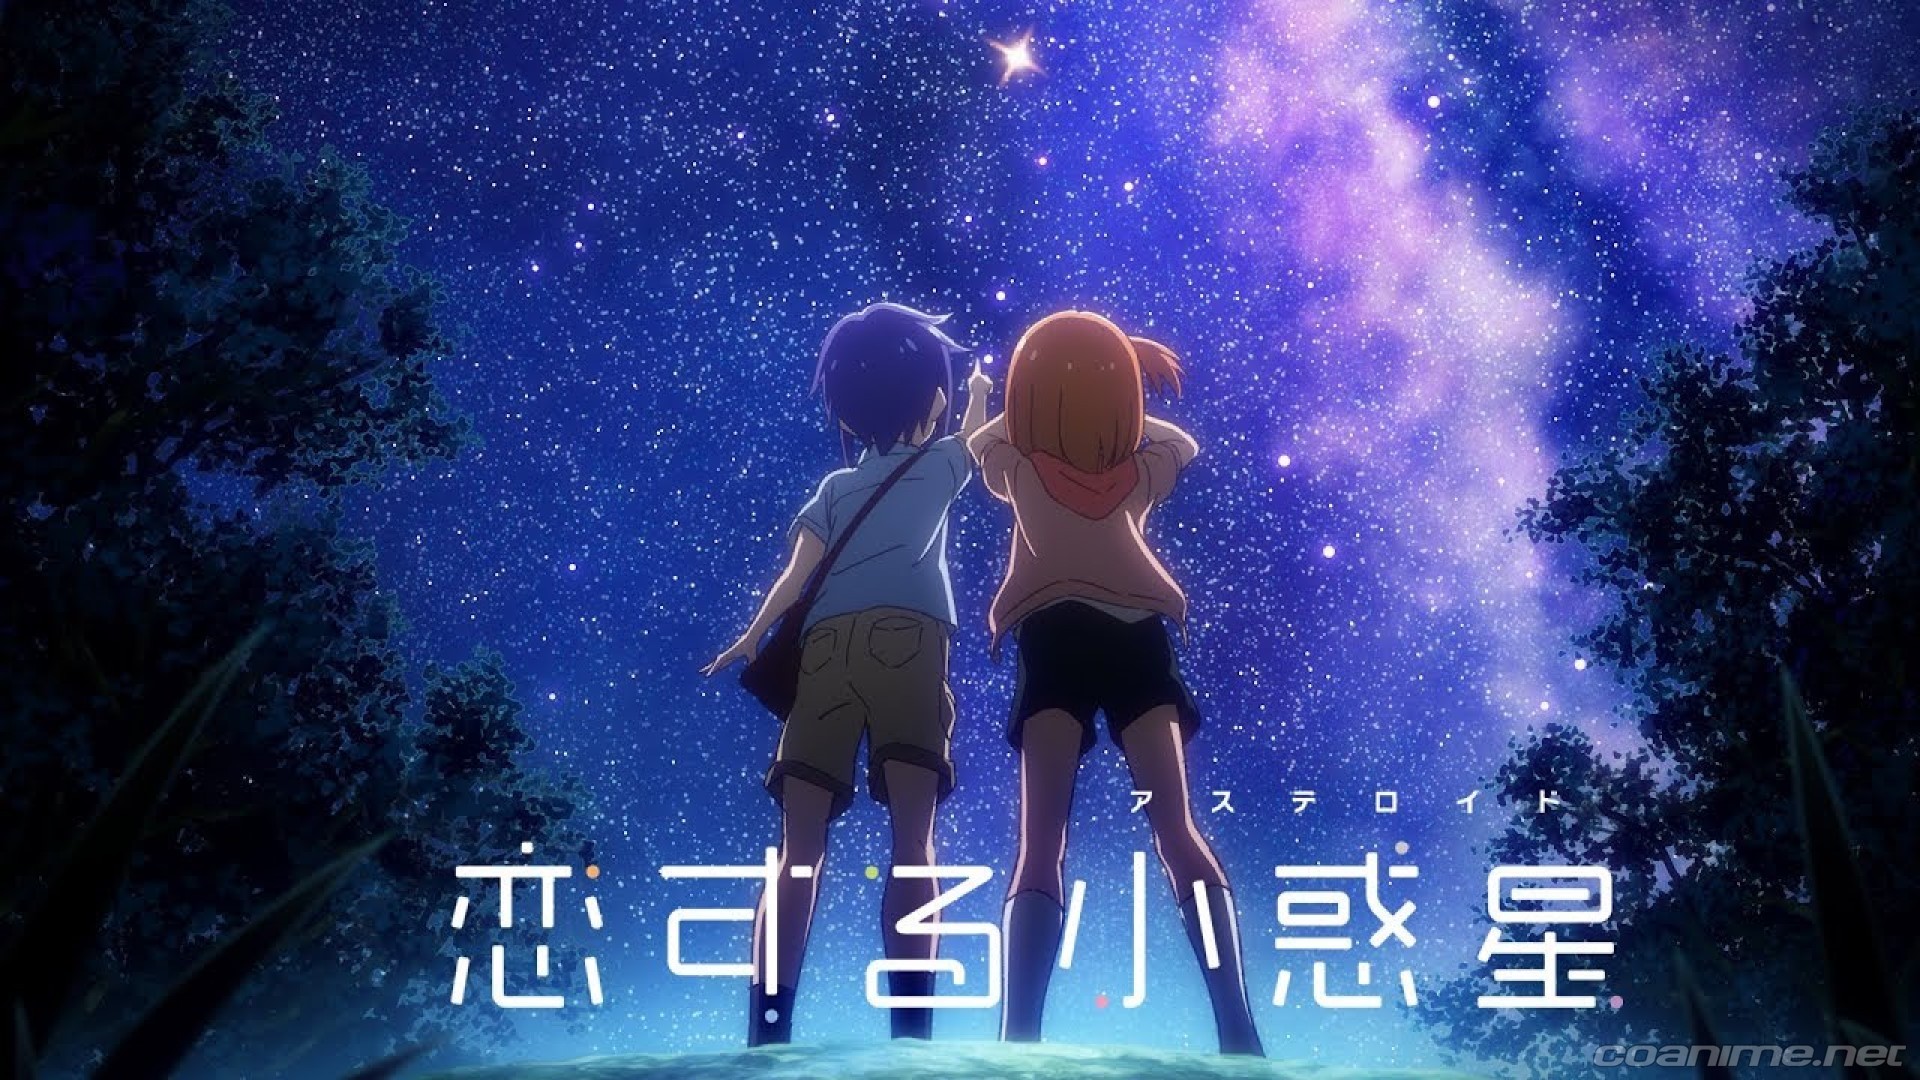 Nuevo material para el nuevo Anime Koisuru Asteroid